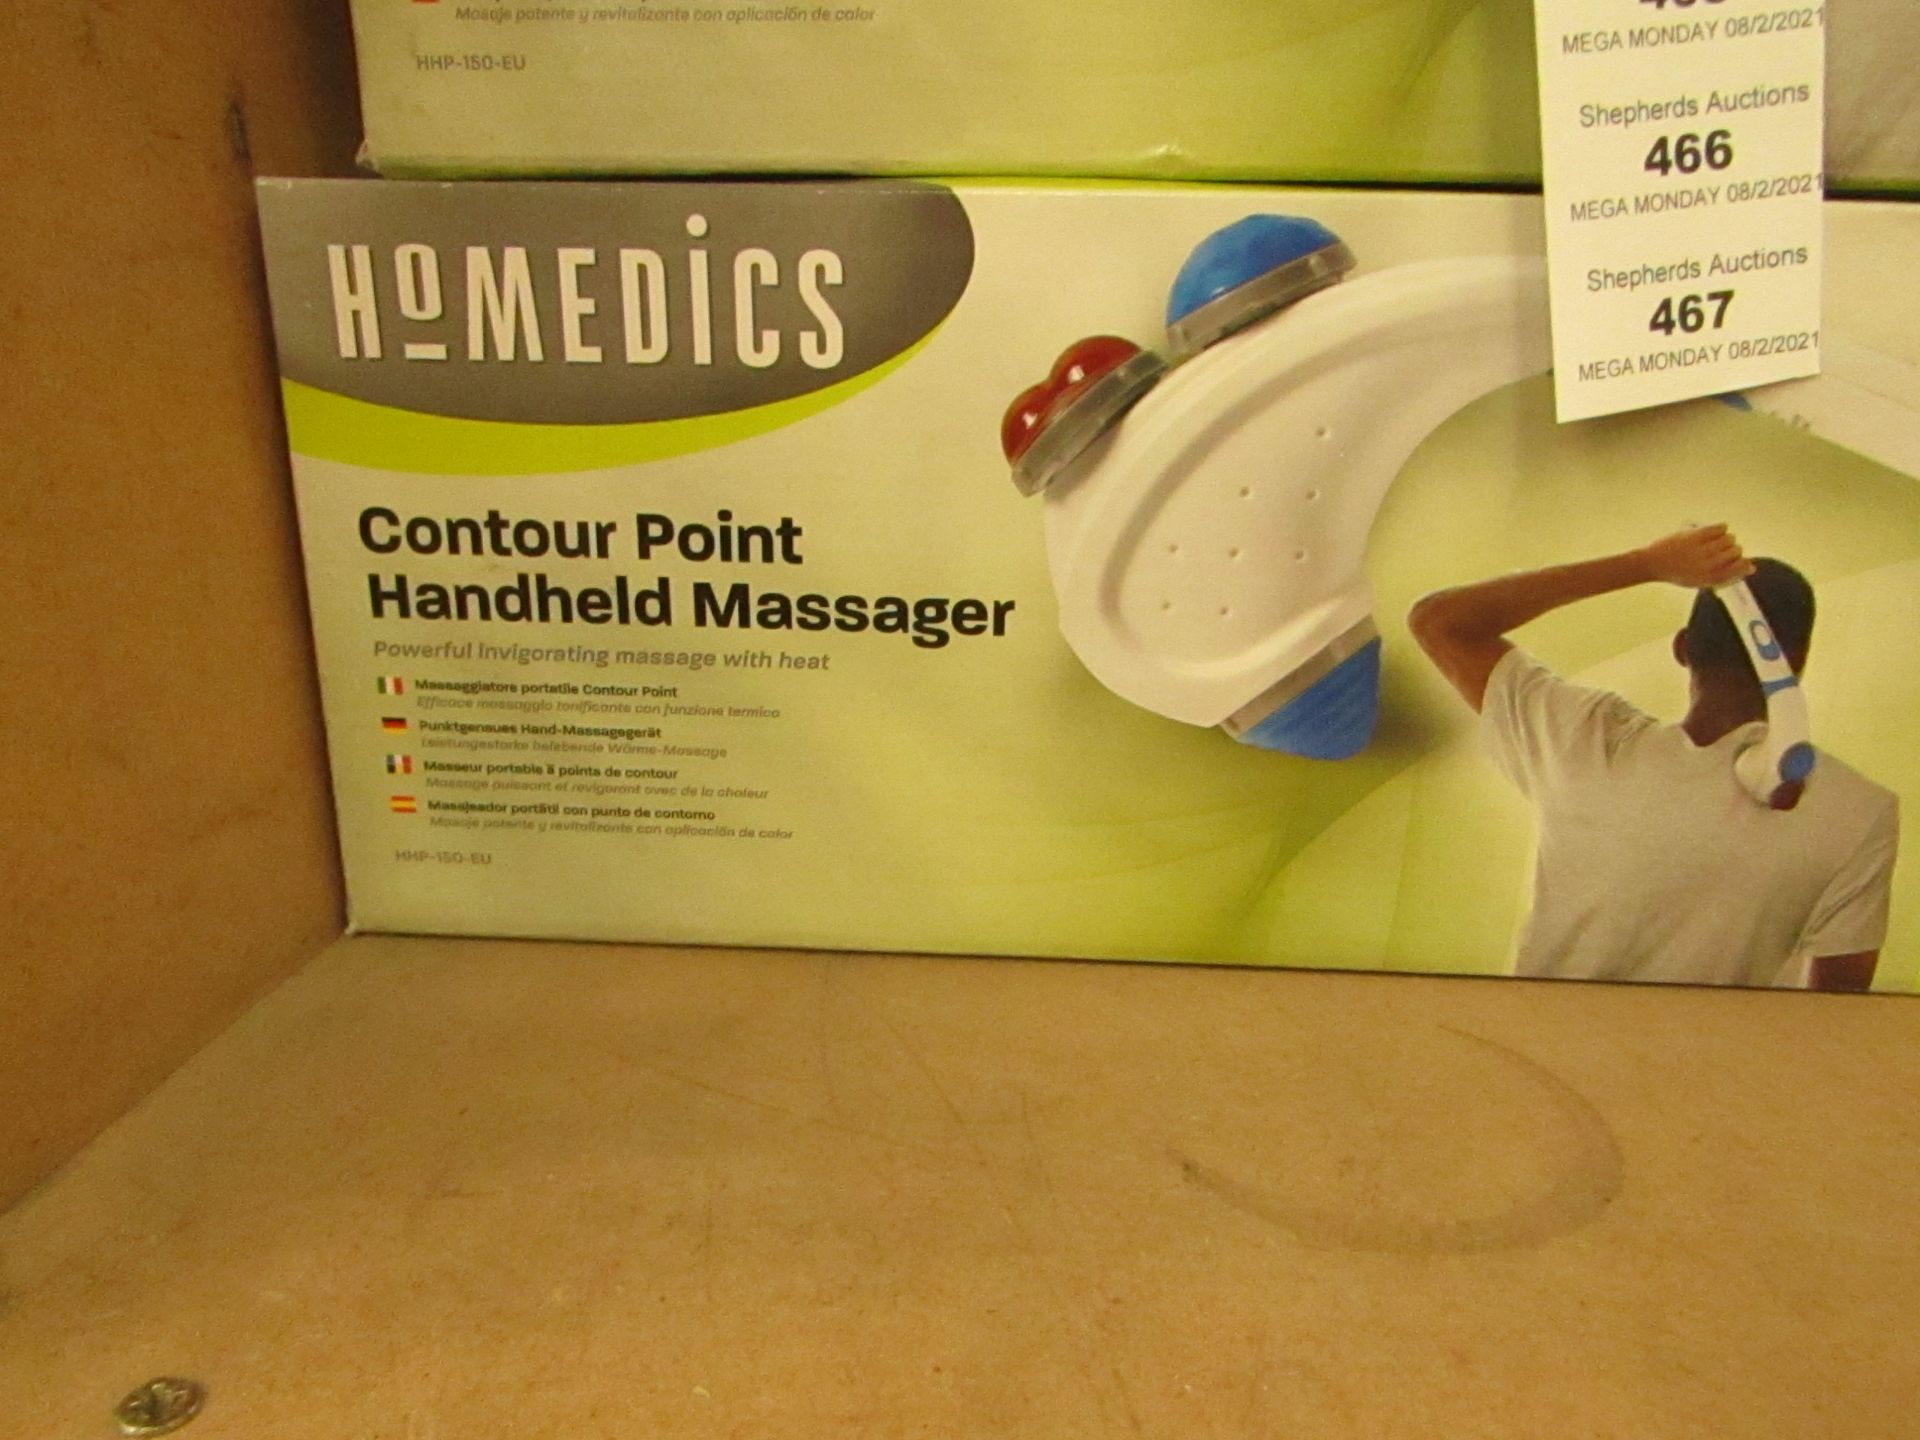 Homedics - Contour Point Handheld Massager - Unused & Boxed.